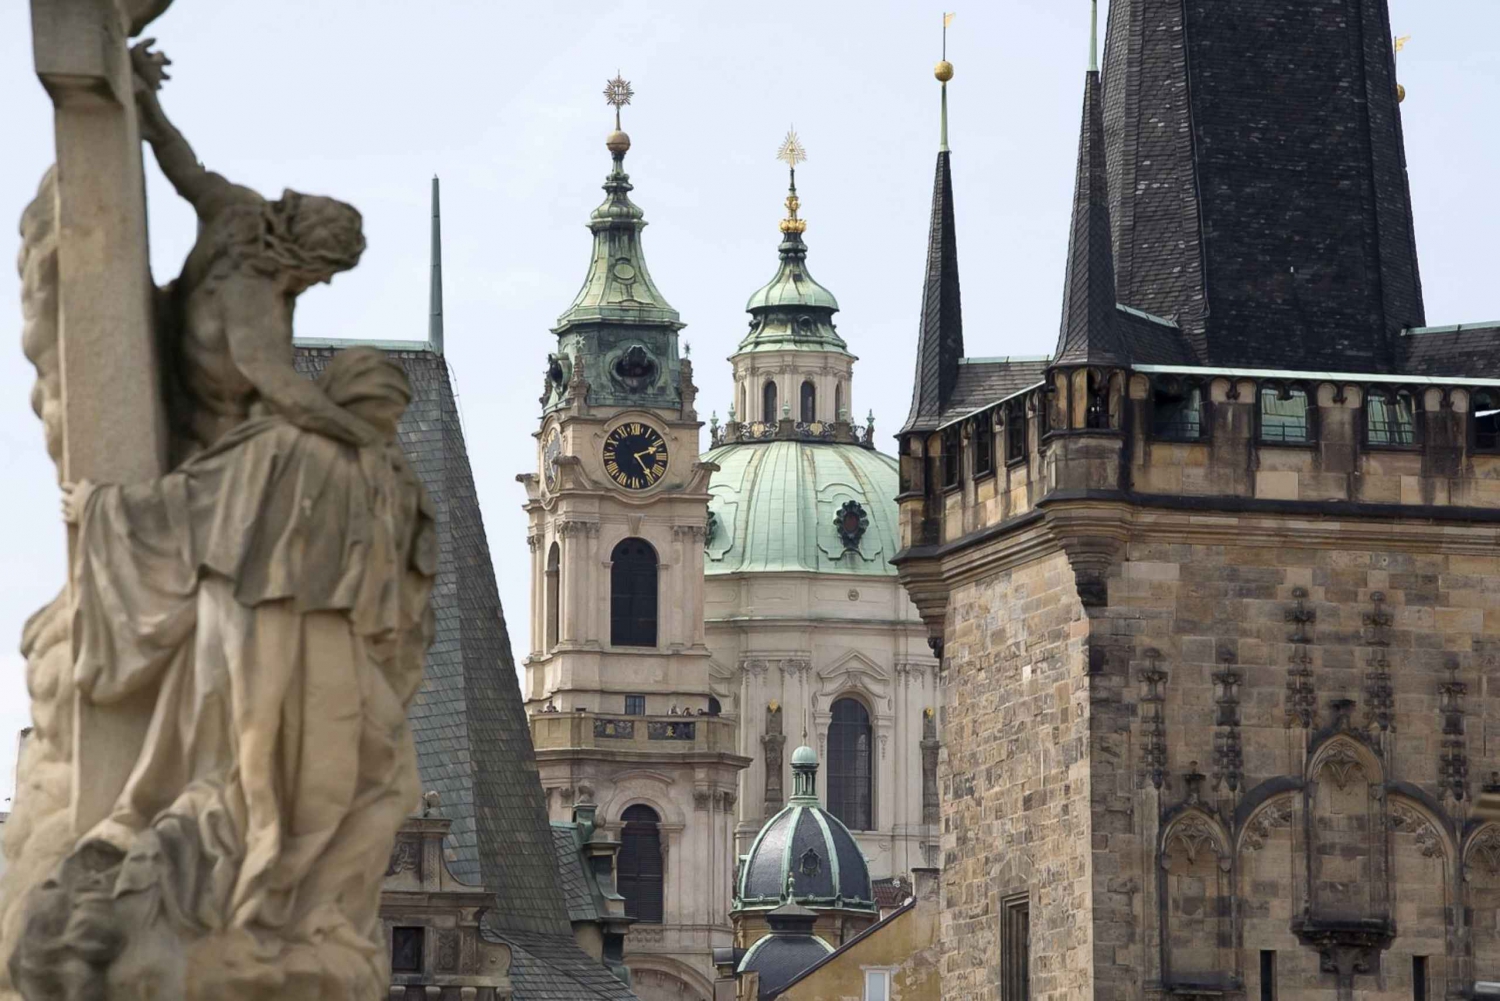 Prague: City Highlights Private Walking Tour